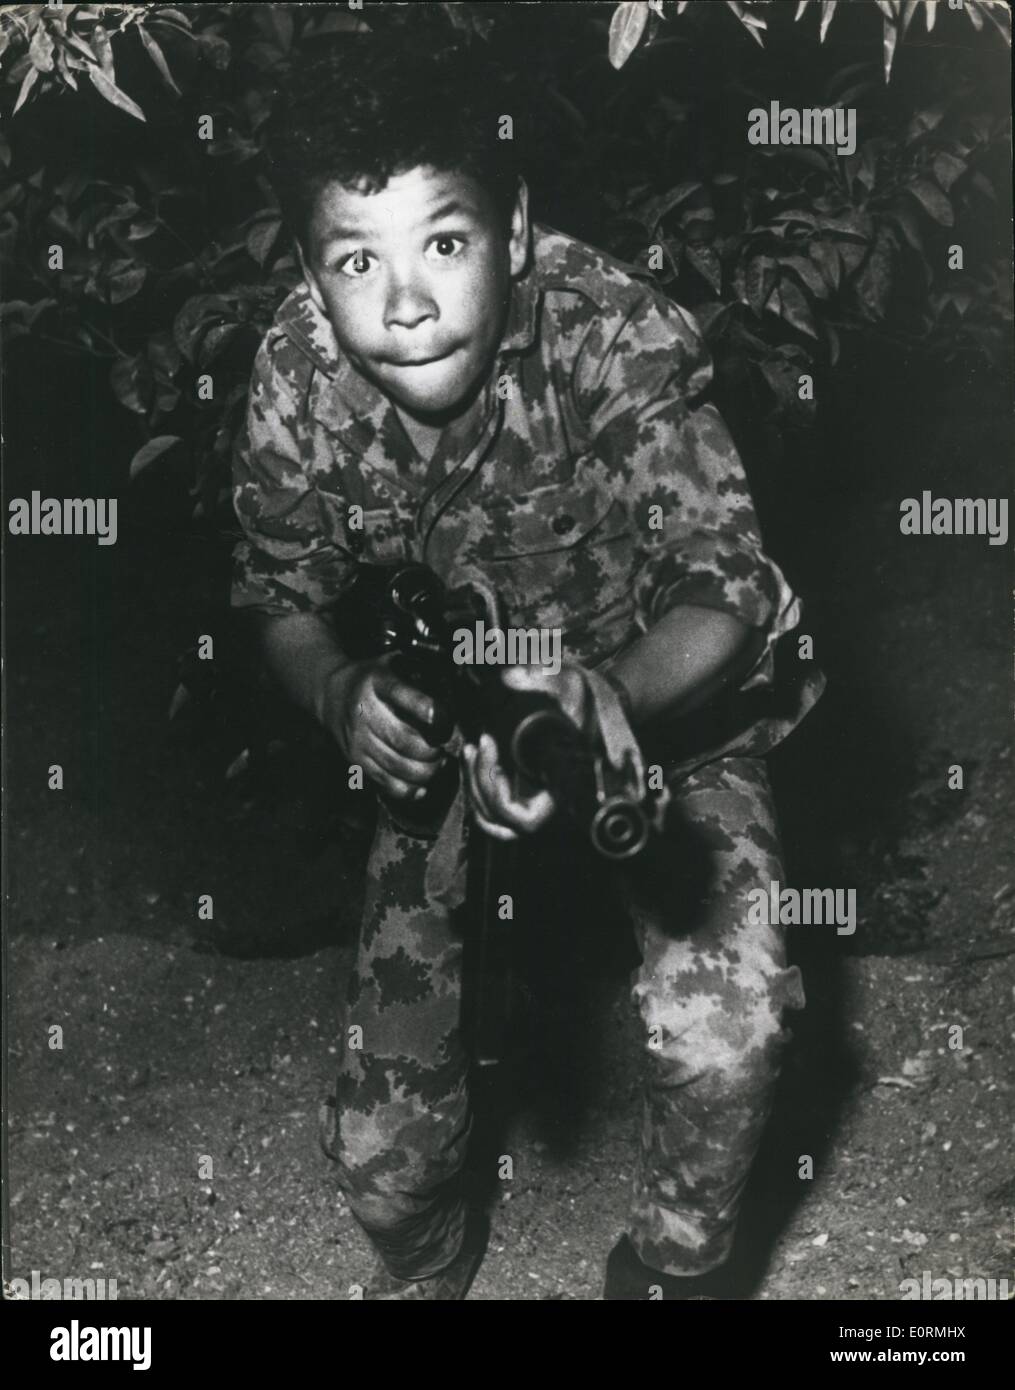 Jan 1, 1960 - 13 year old Kaled Abdul Rezak, with his machine gun, during assault training in the Jordan Valley : Stock Photo